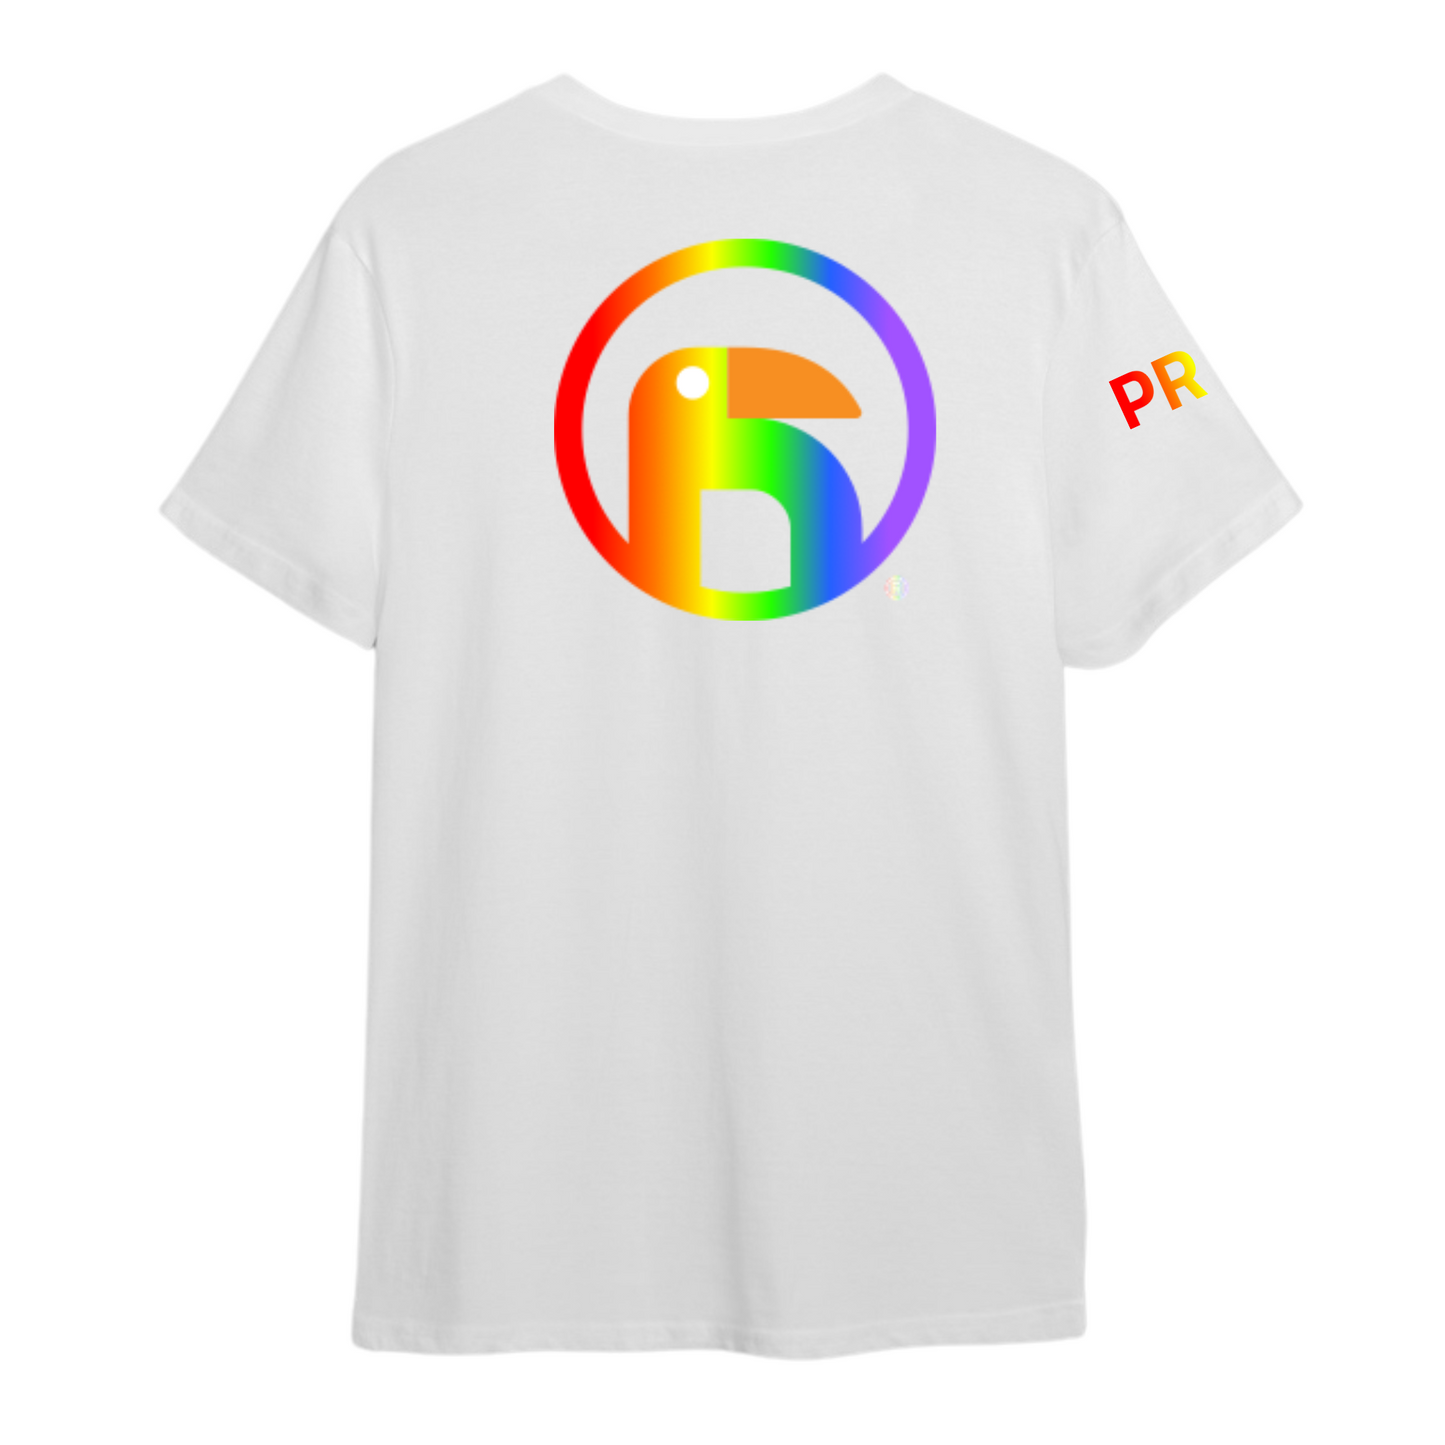 Bold Penguin Pride 2024 T-Shirt